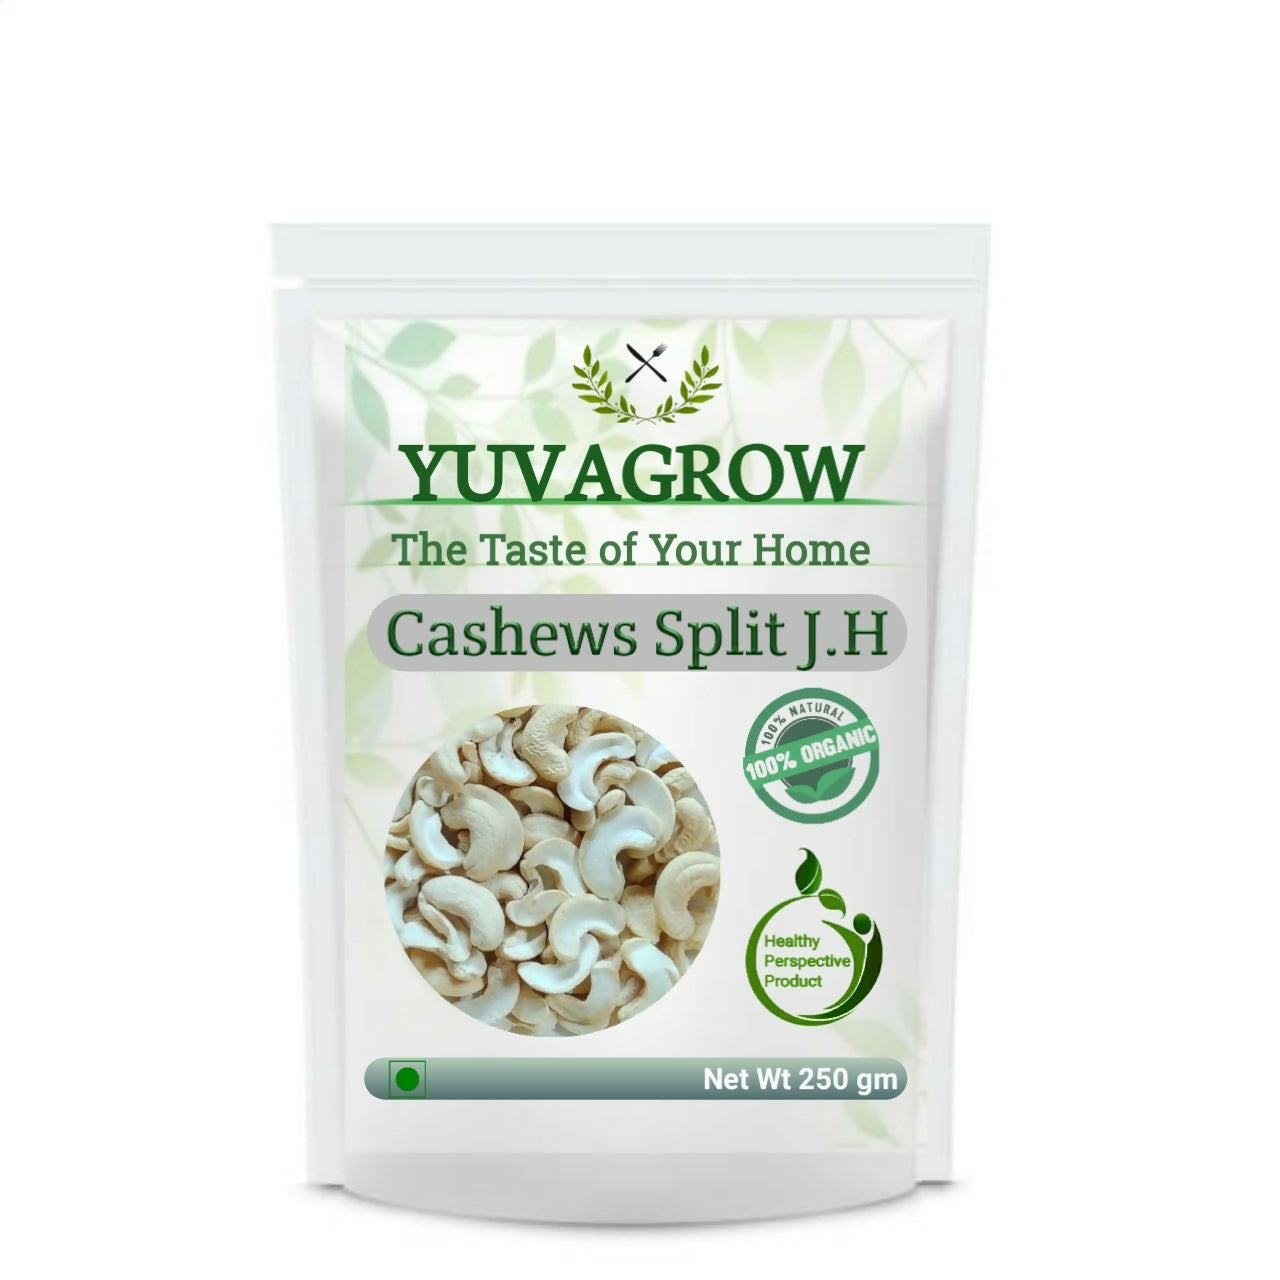 Yuvagrow Cashews Split J.H